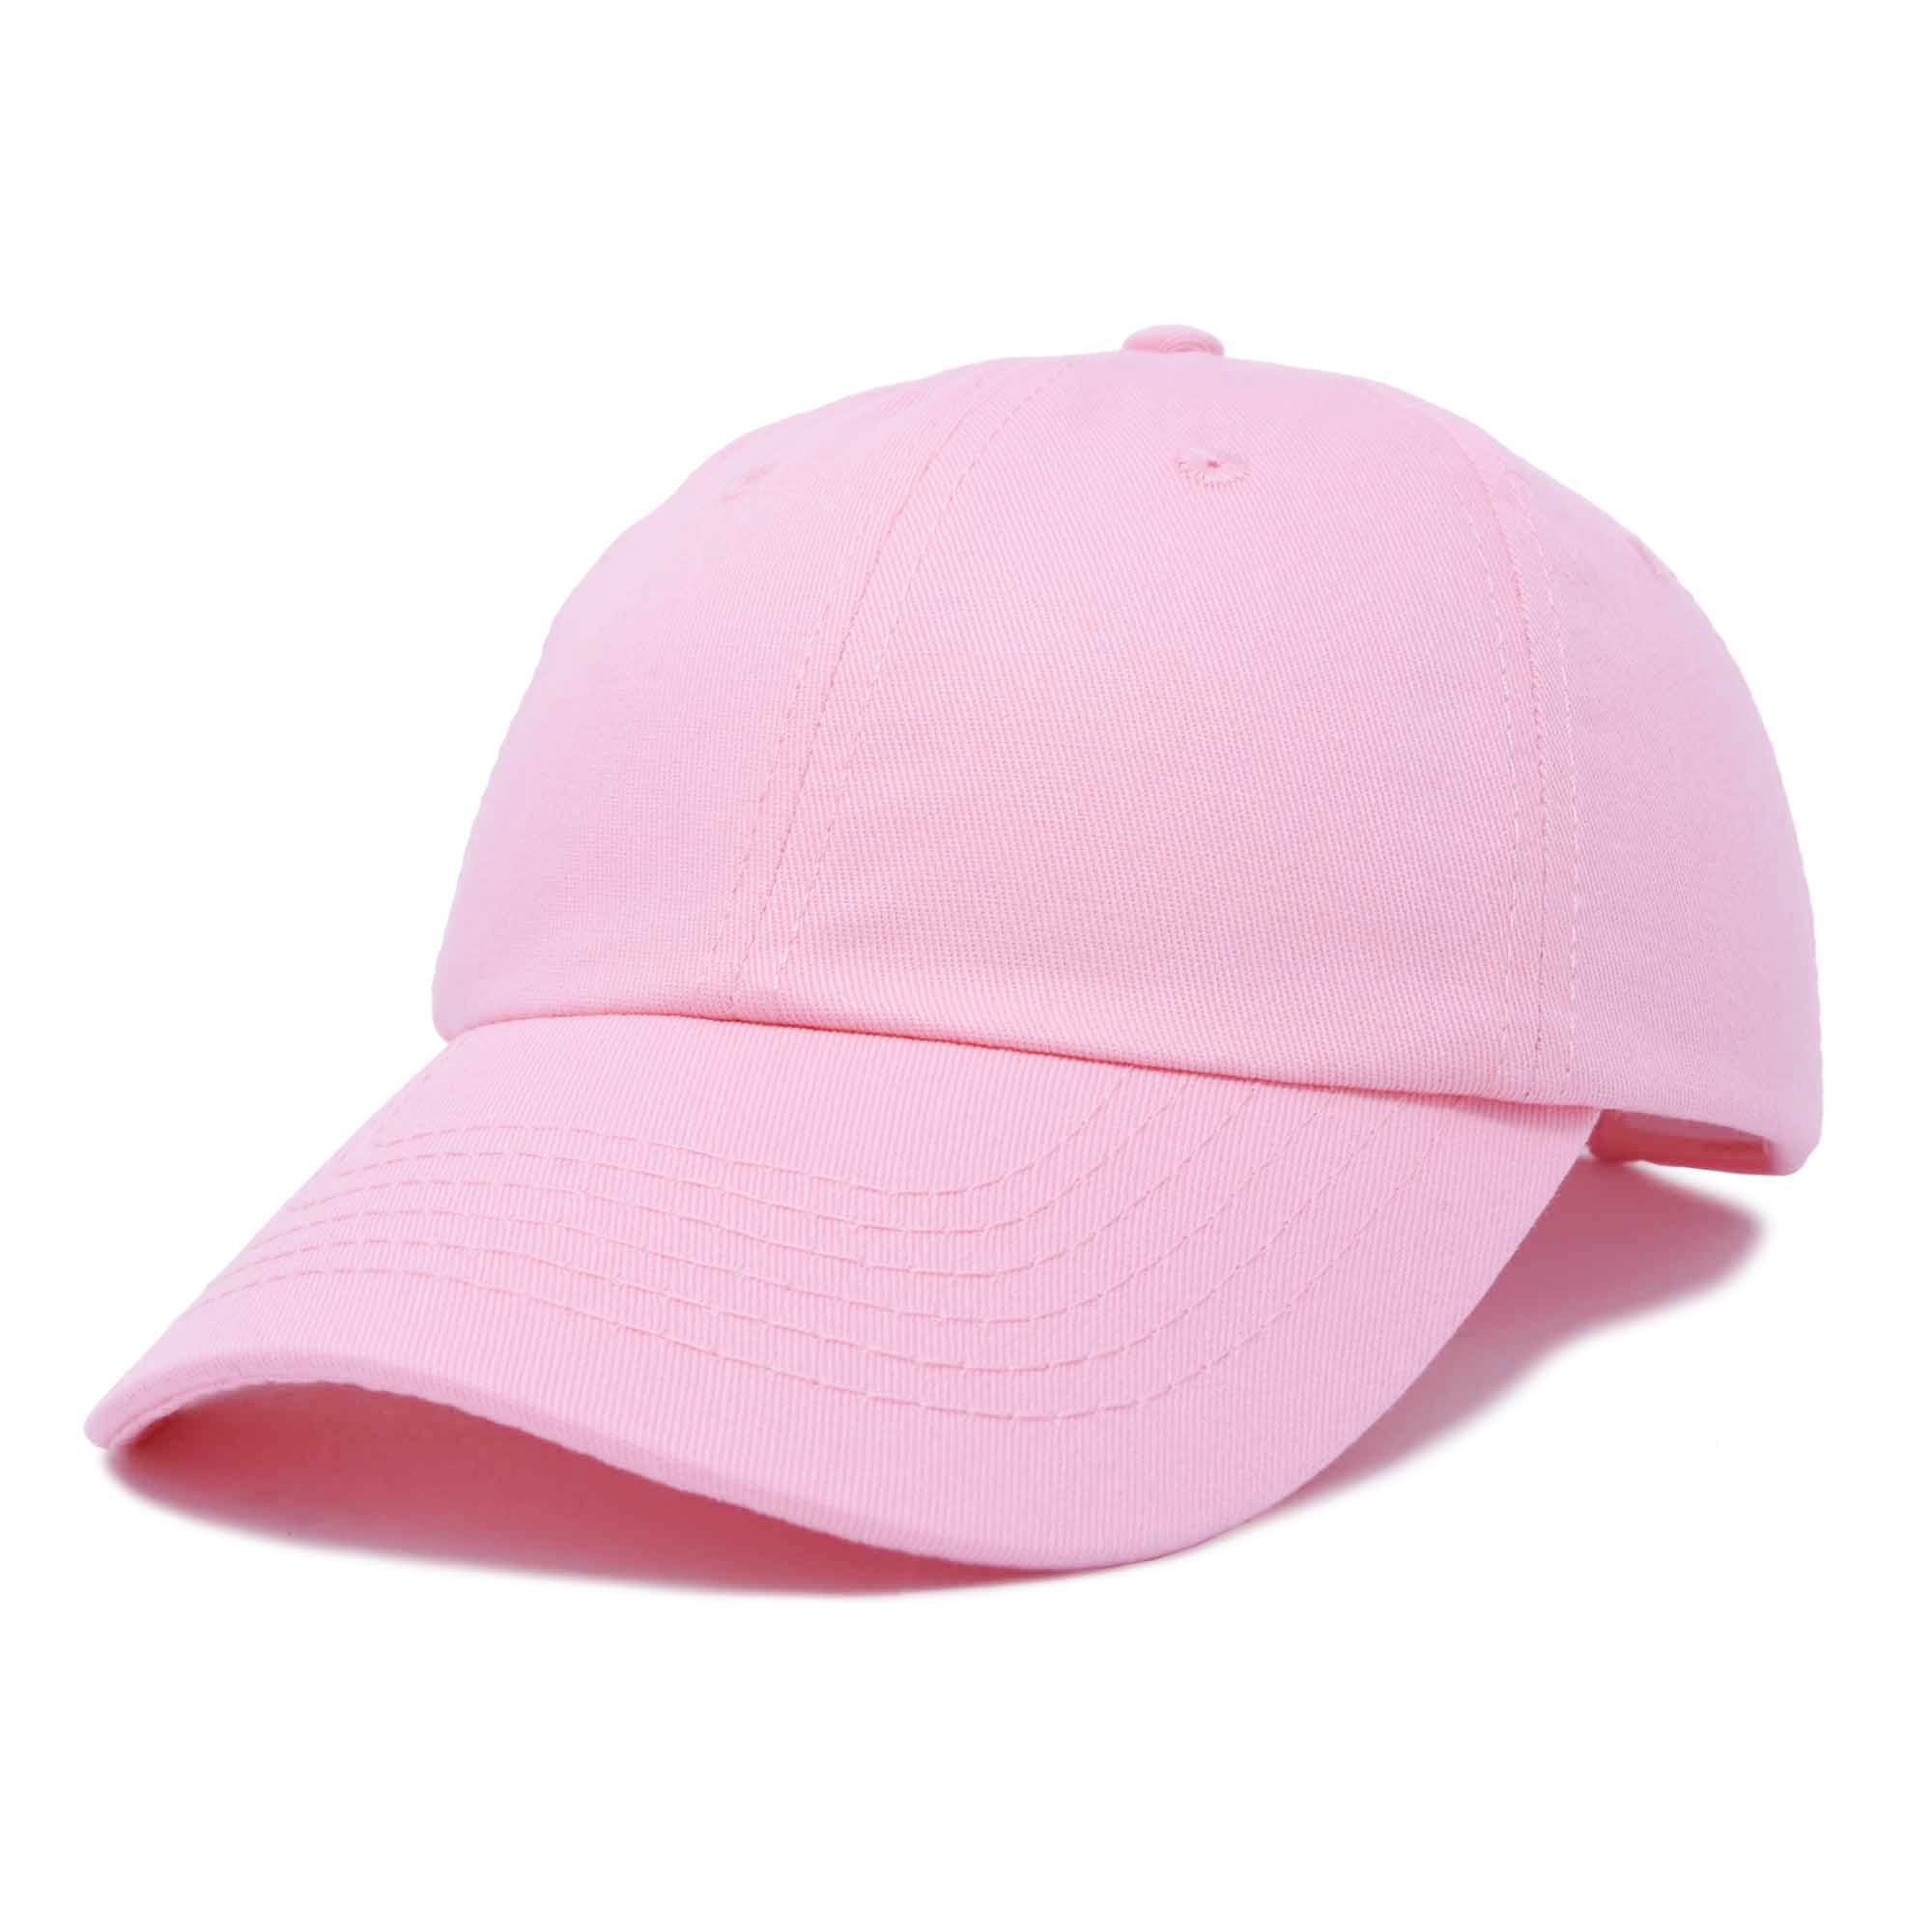 DALIX Womens Hat Lightweight 100% Cotton Cap in Pink - Walmart.com